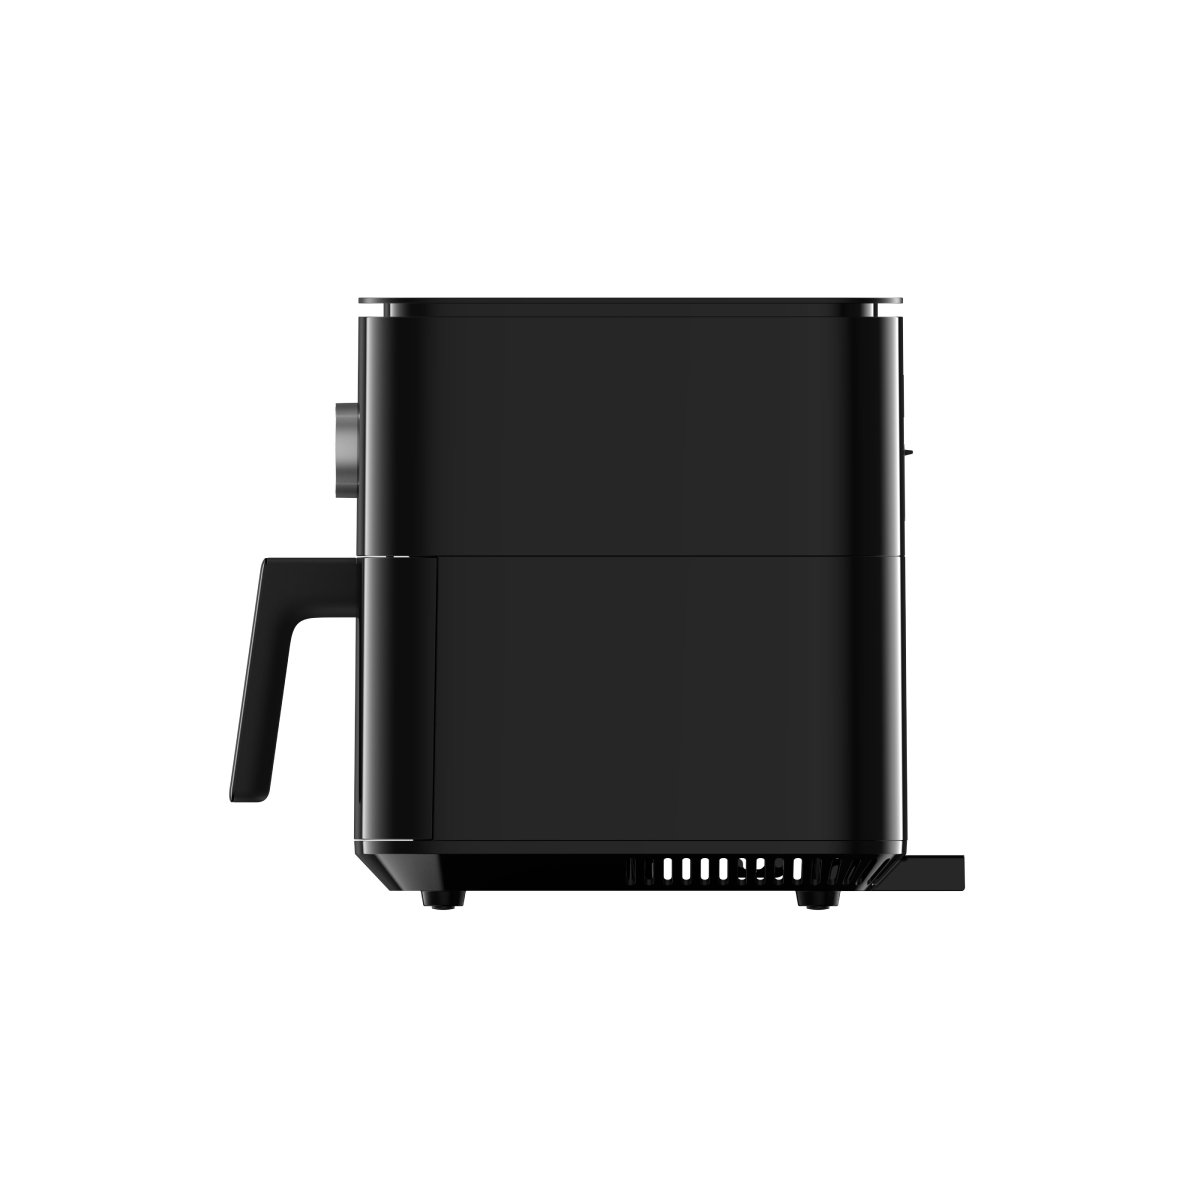 Xiaomi Smart Air Fryer 6.5L (Black), , large image number 3